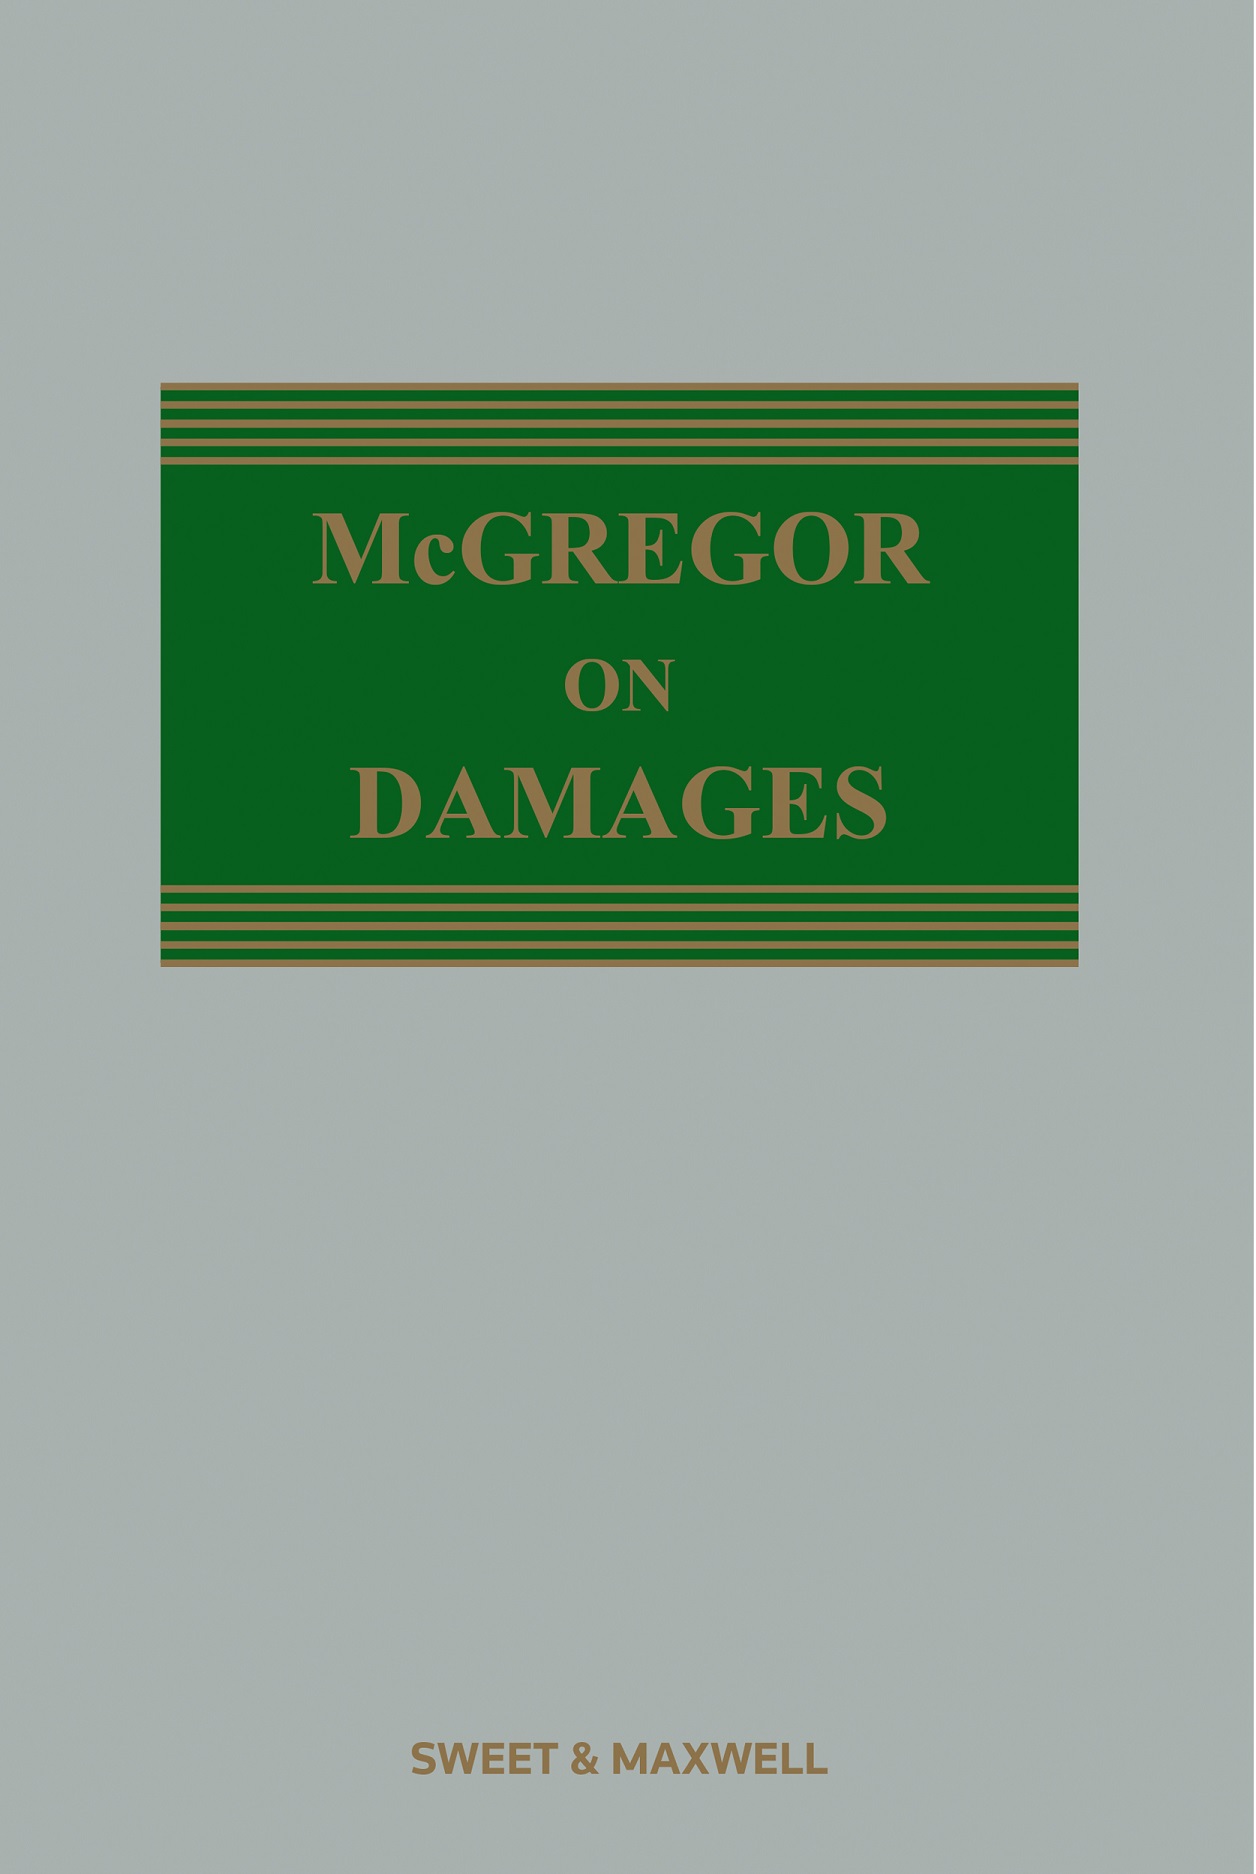 McGregor on Damages 21e MW+Sup